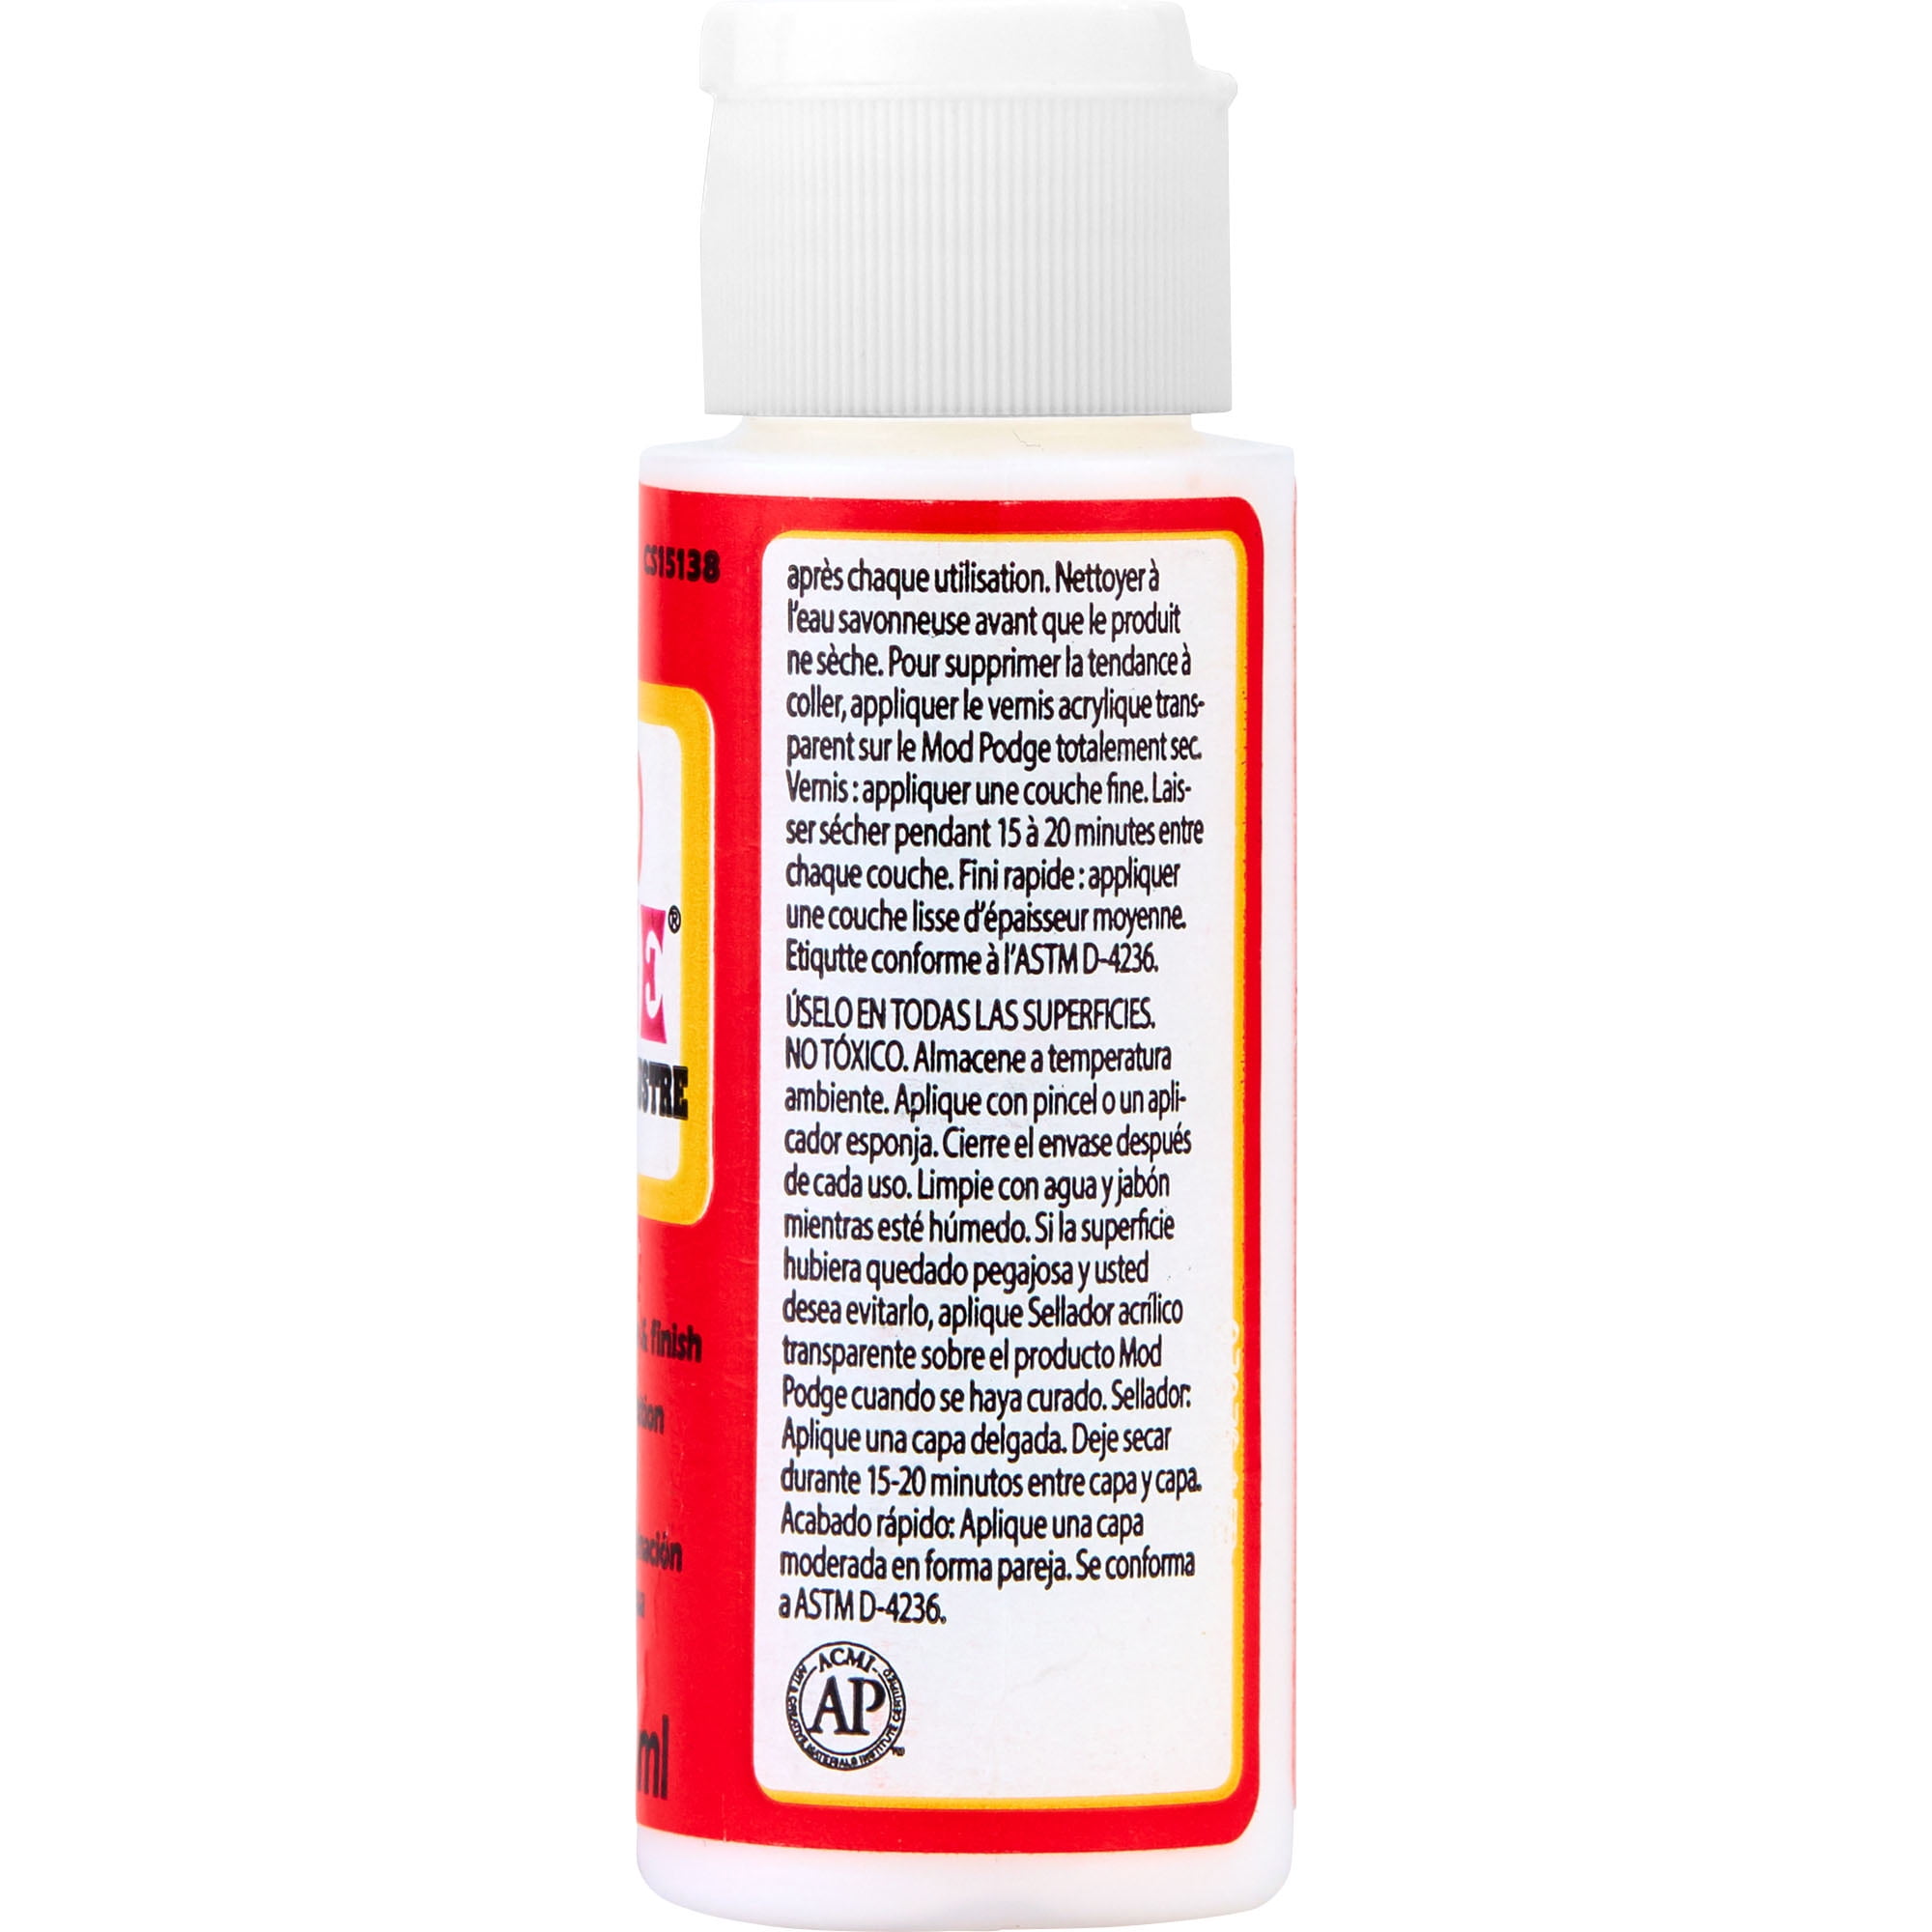 MOD PODGE Gloss Water-based Glue, Sealer, Finisher (16 Fl Ounce), Plaid  CS11202